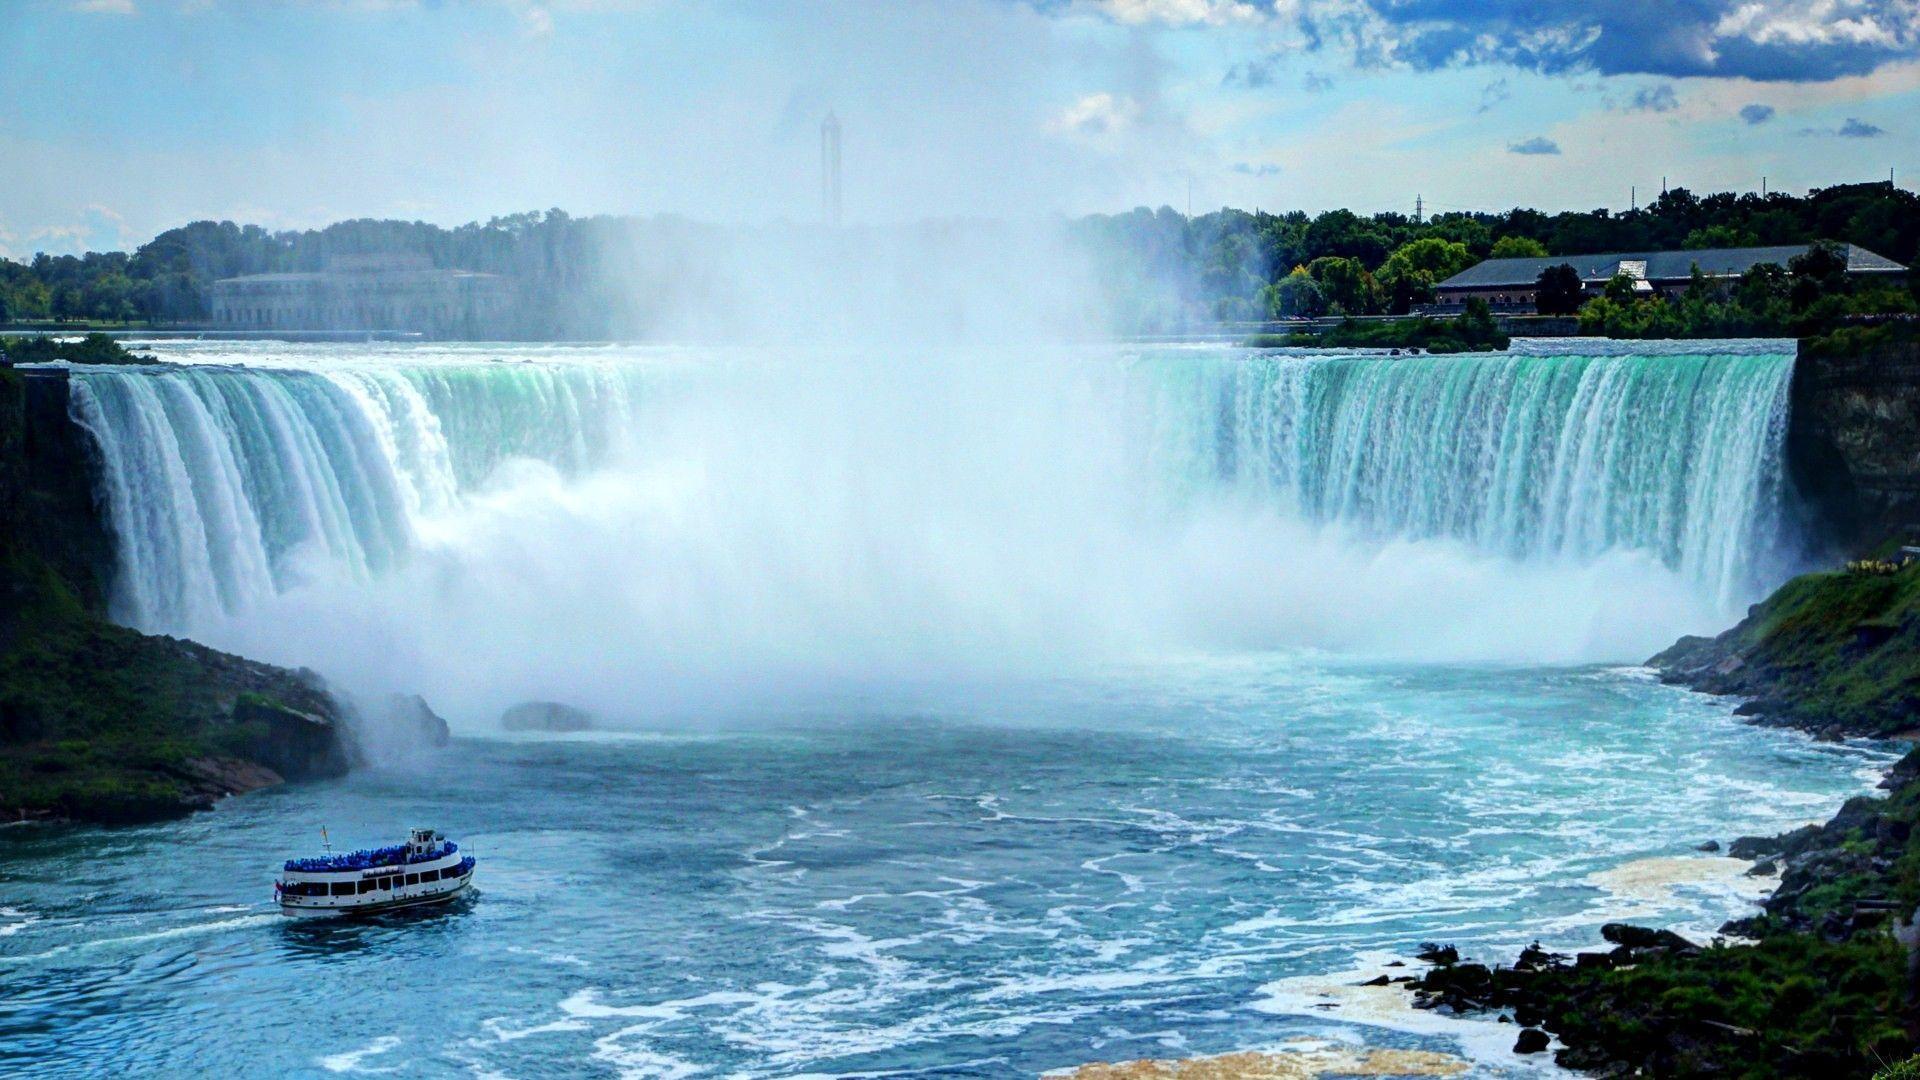 Niagara Falls, Canada Landscape Travel photo and wallpaper